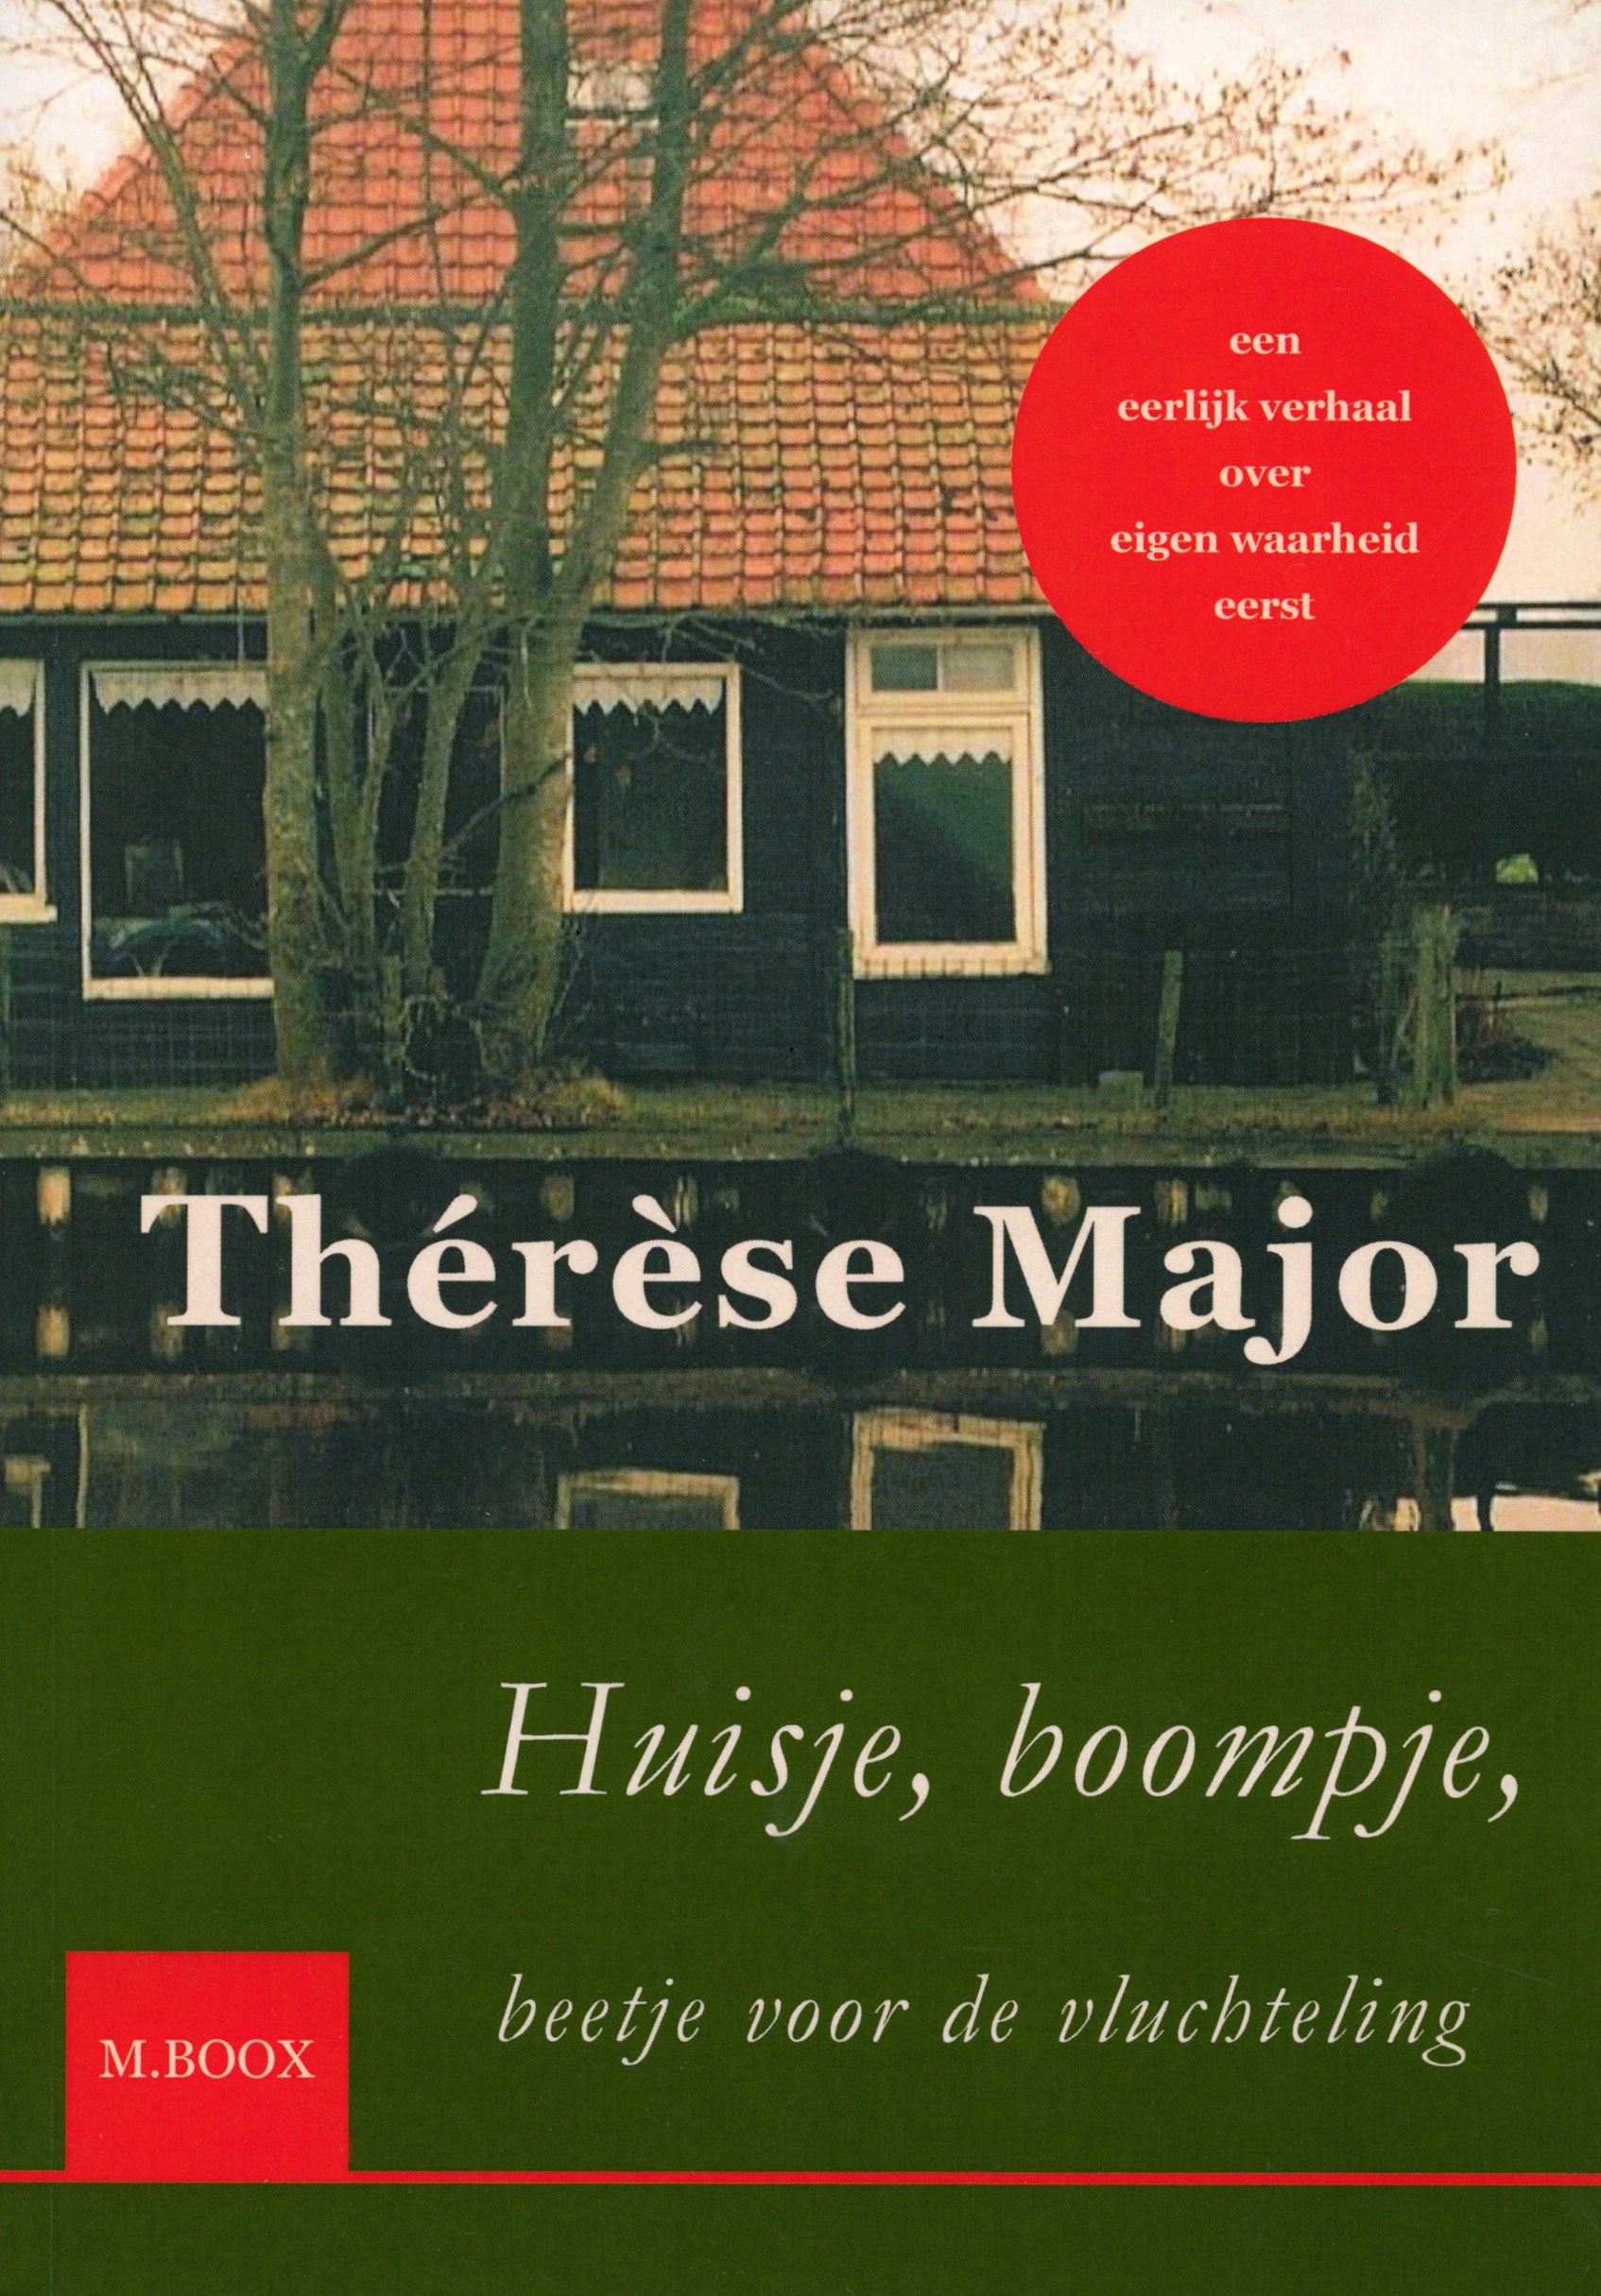 Huisje, boompje, beetje voor de vluchteling Thérèse Major